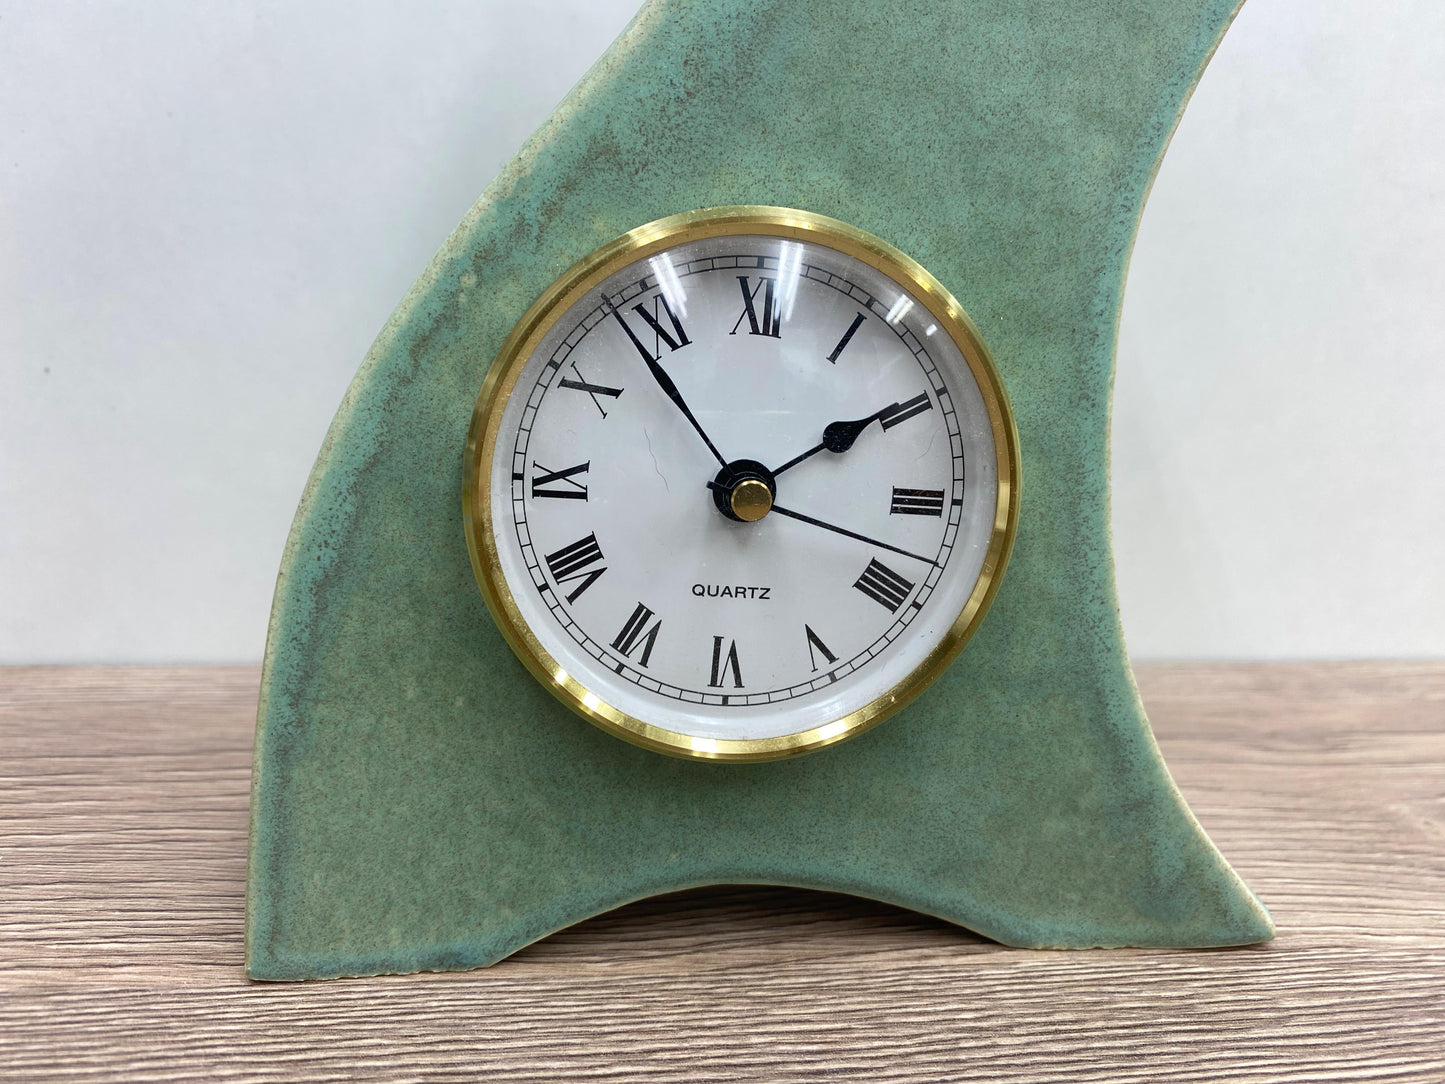 Ceramic Mantel Clock with Enclosed Face - Cornish Copper